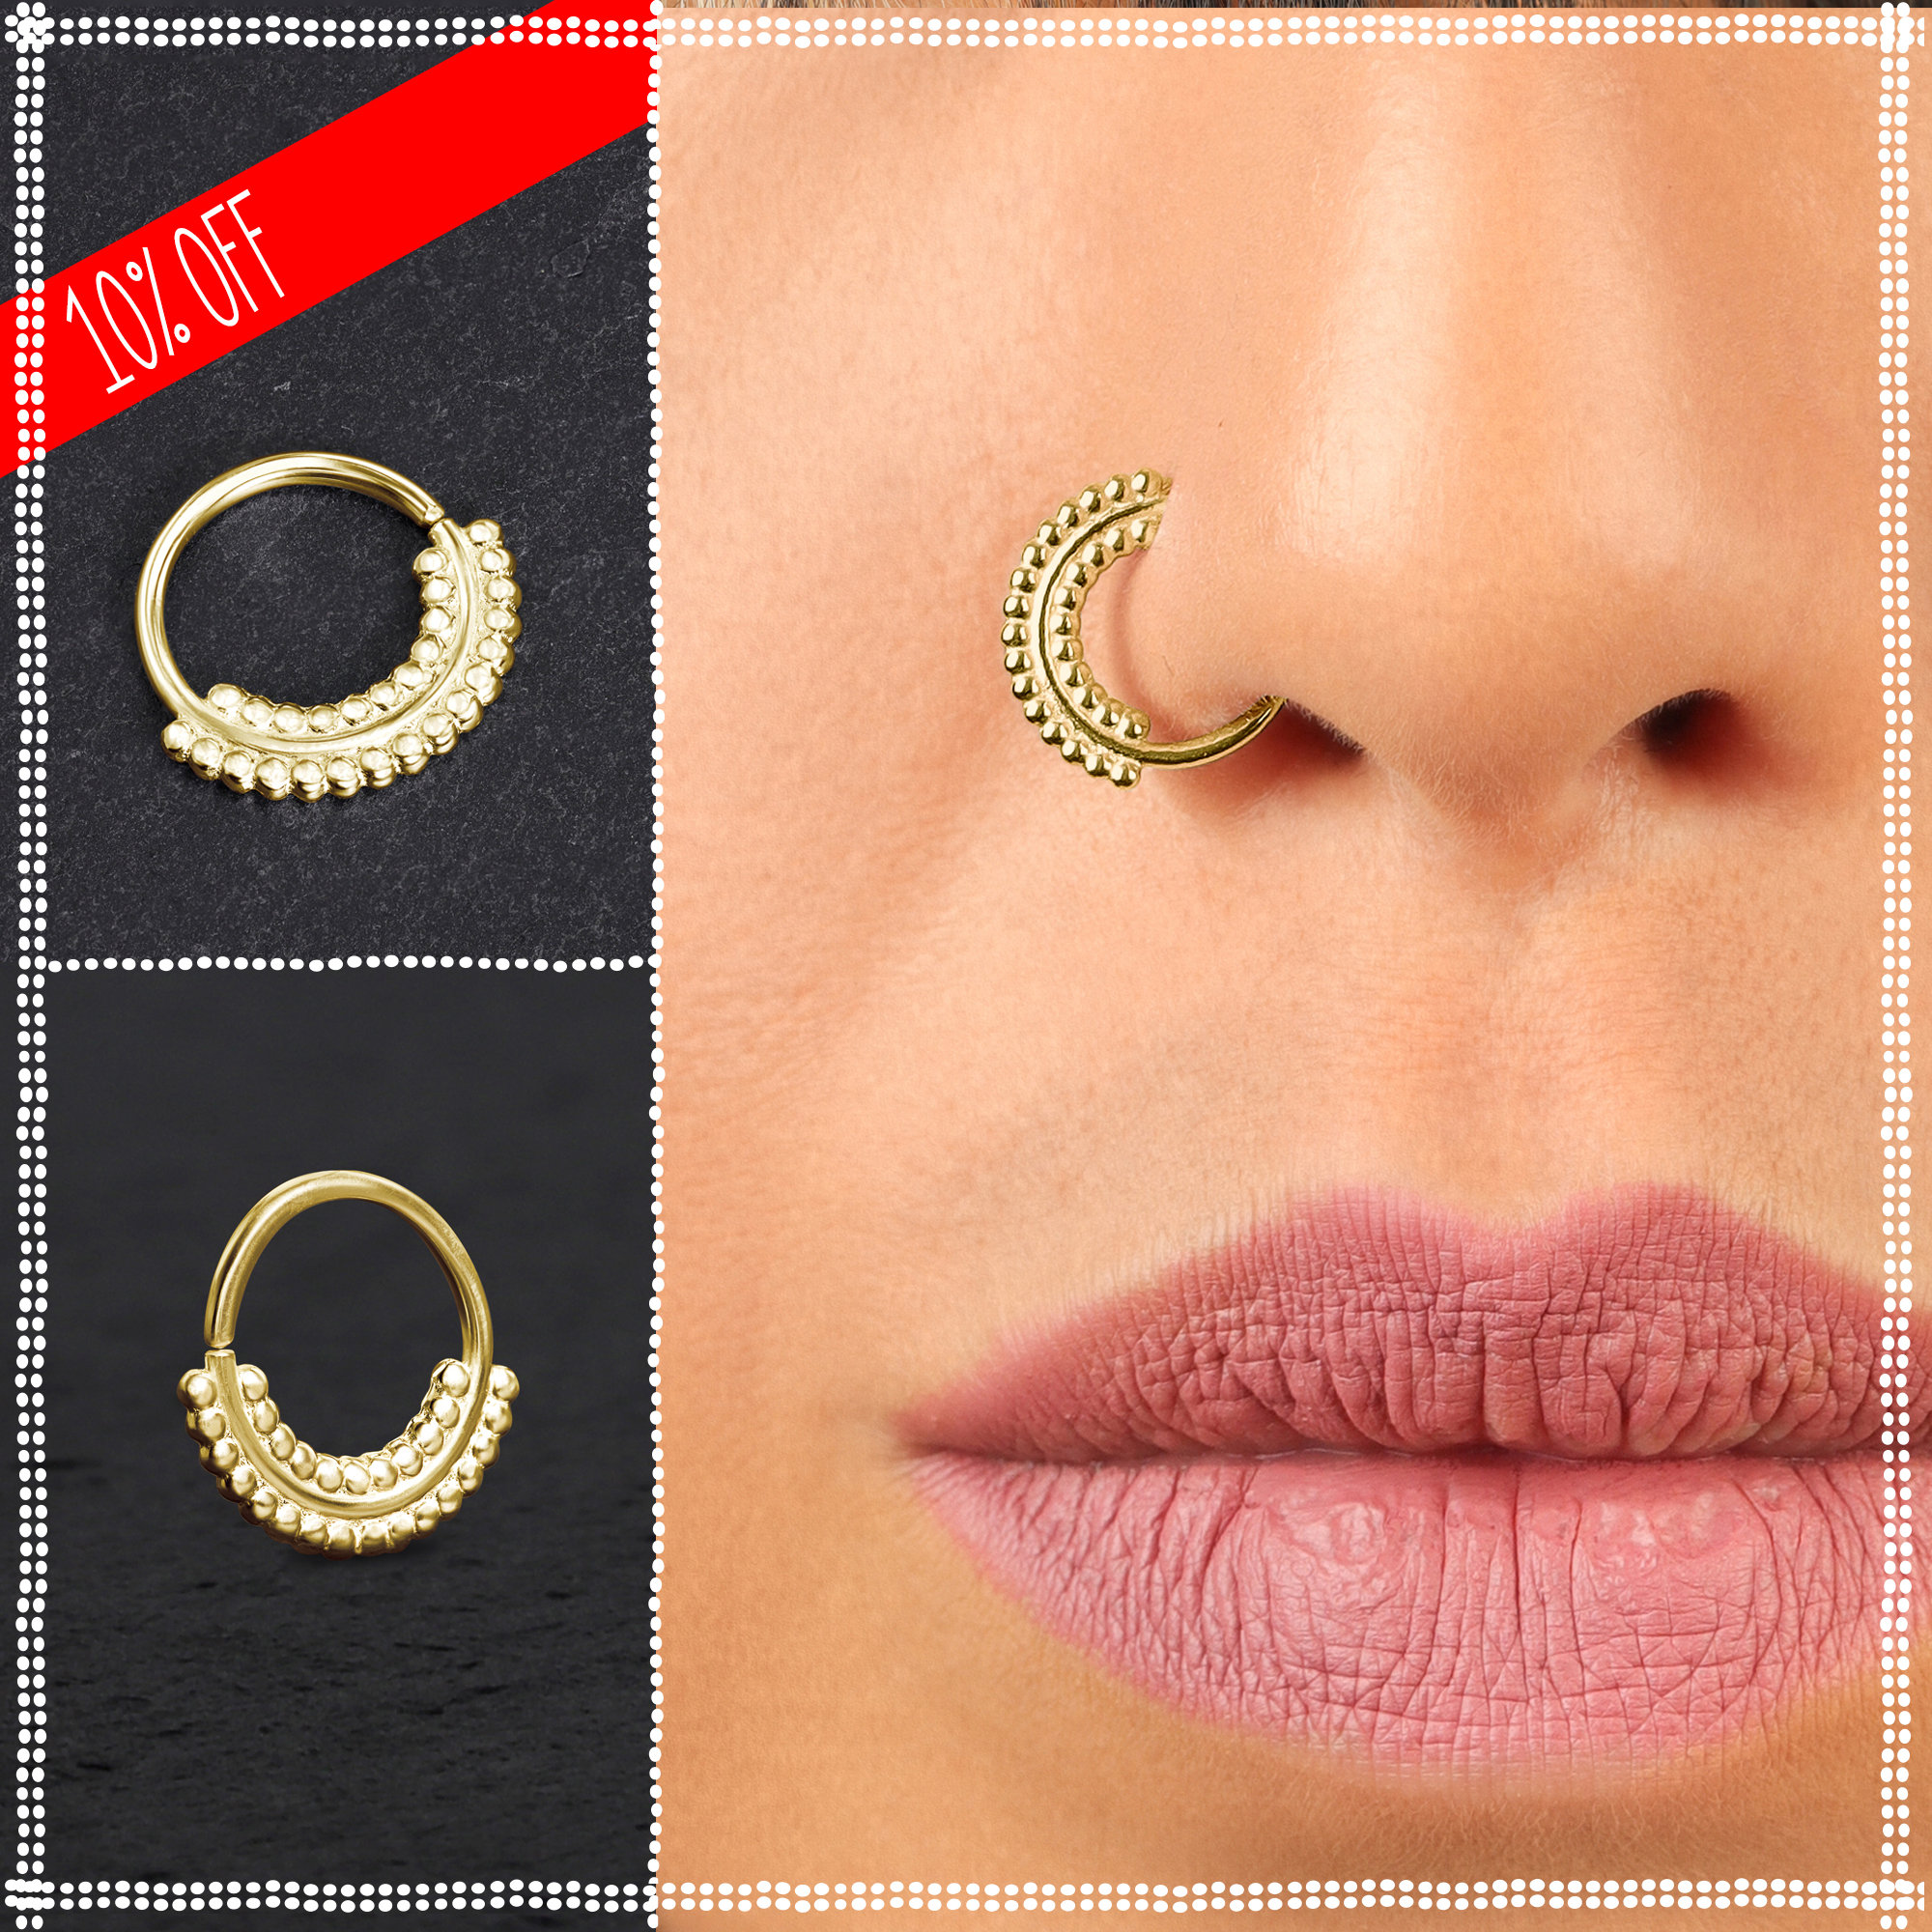 Buy Paridhi gold plated onderful piercing Nose Ring for Women/Girls, Ziczan  Latkan Single at Amazon.in